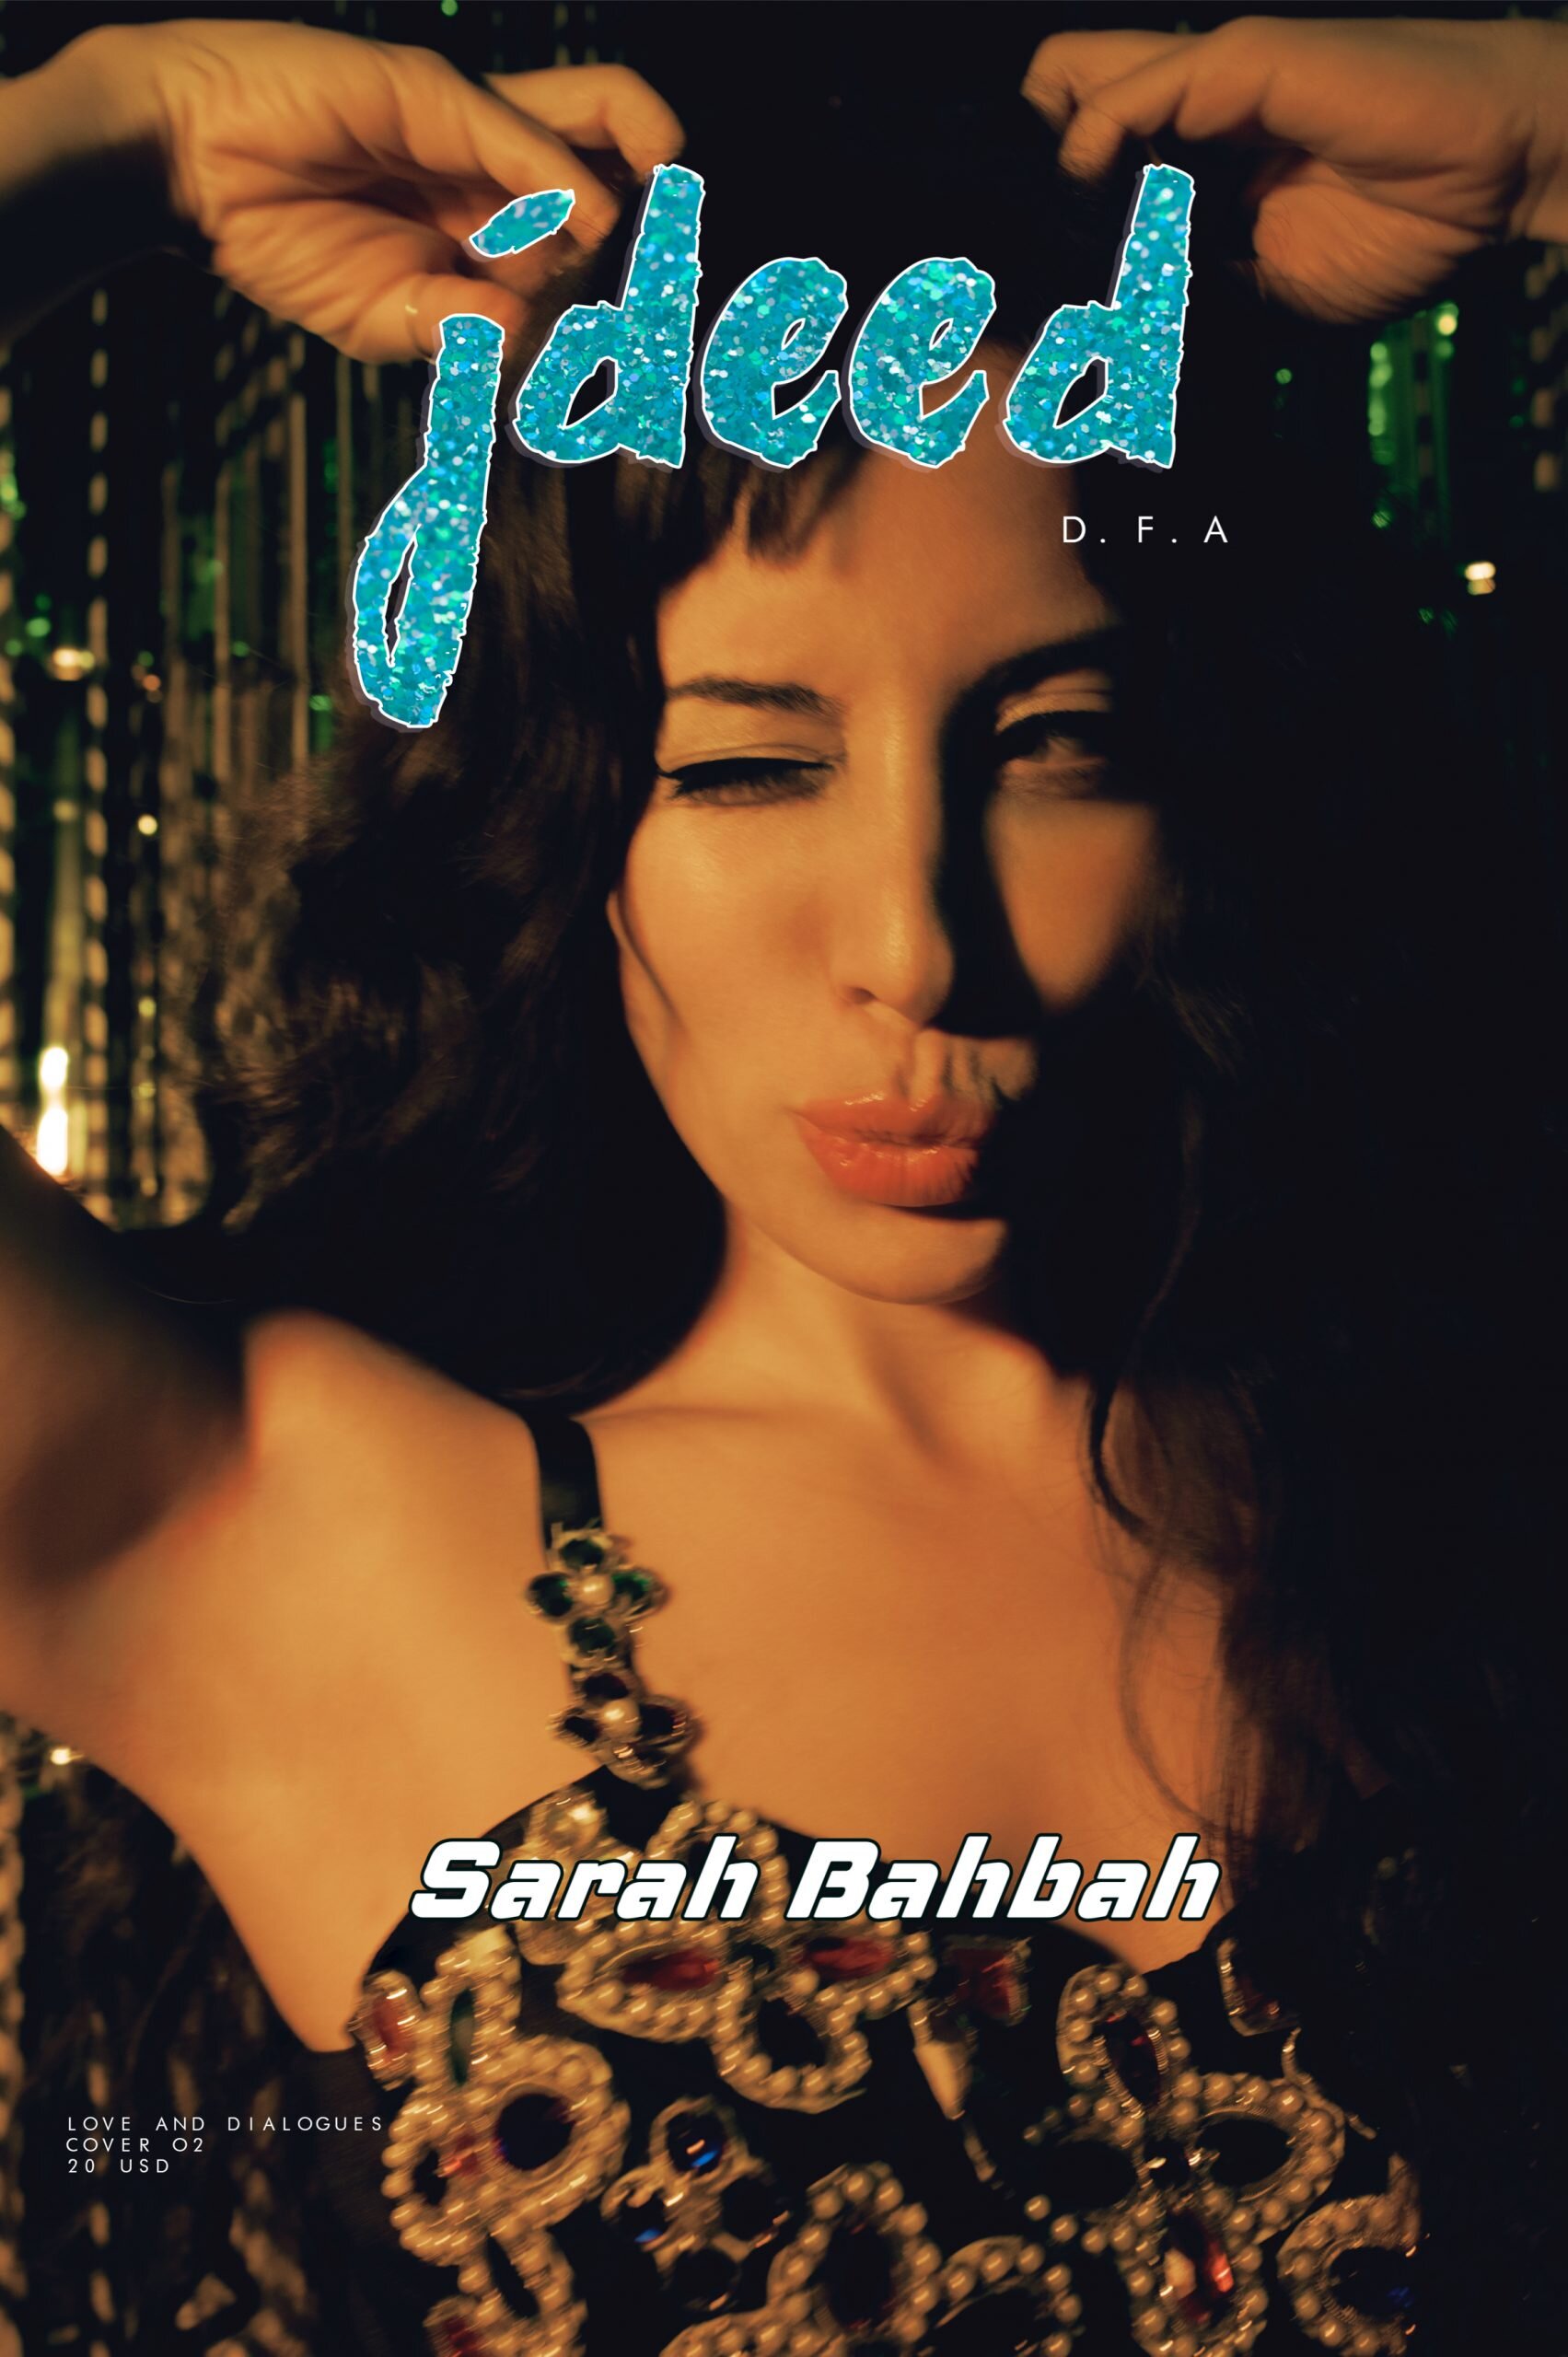 Sarah Bahbah in Lidow Archive